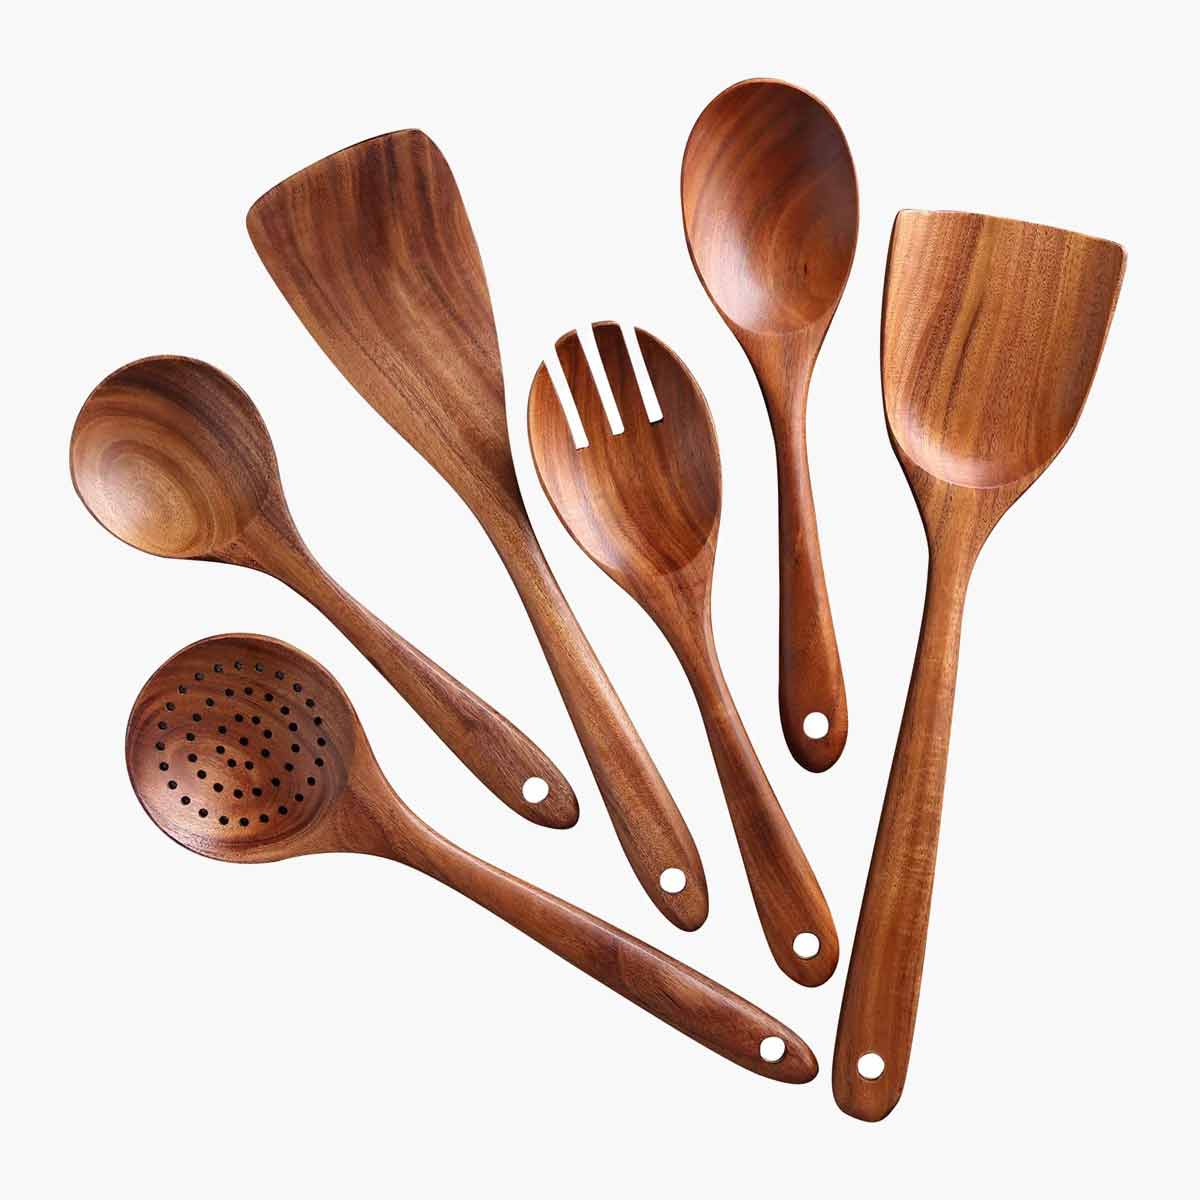 A wooden cooking utensil set.